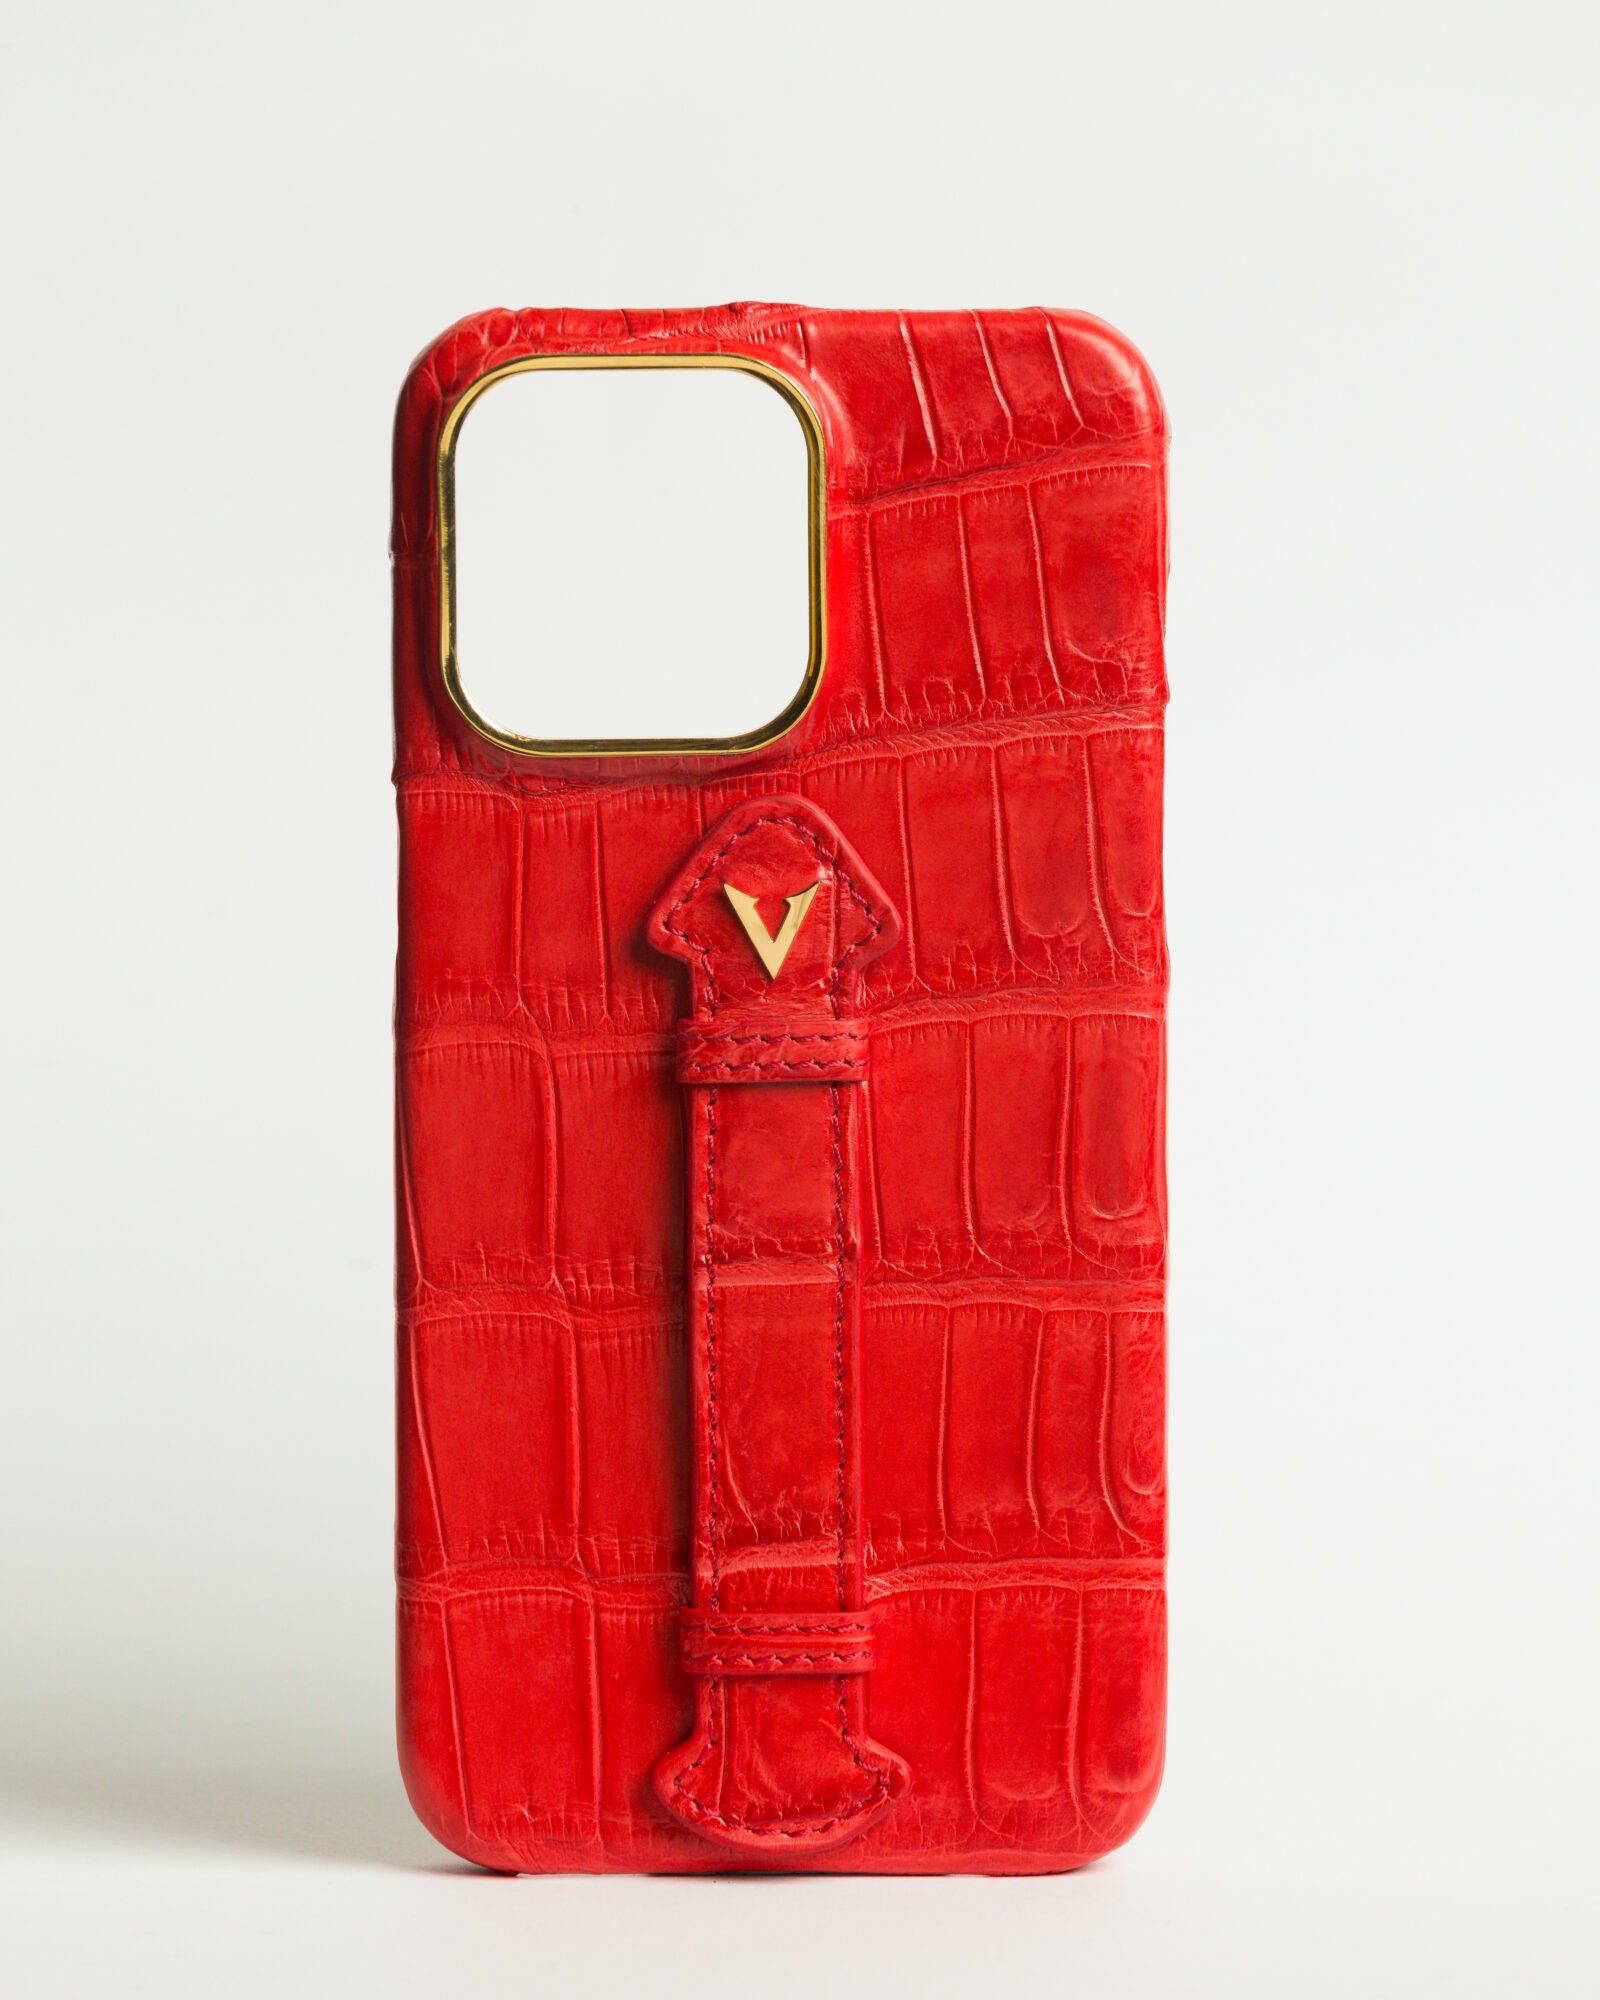 Luxury Red Crocodile leather Iphone case